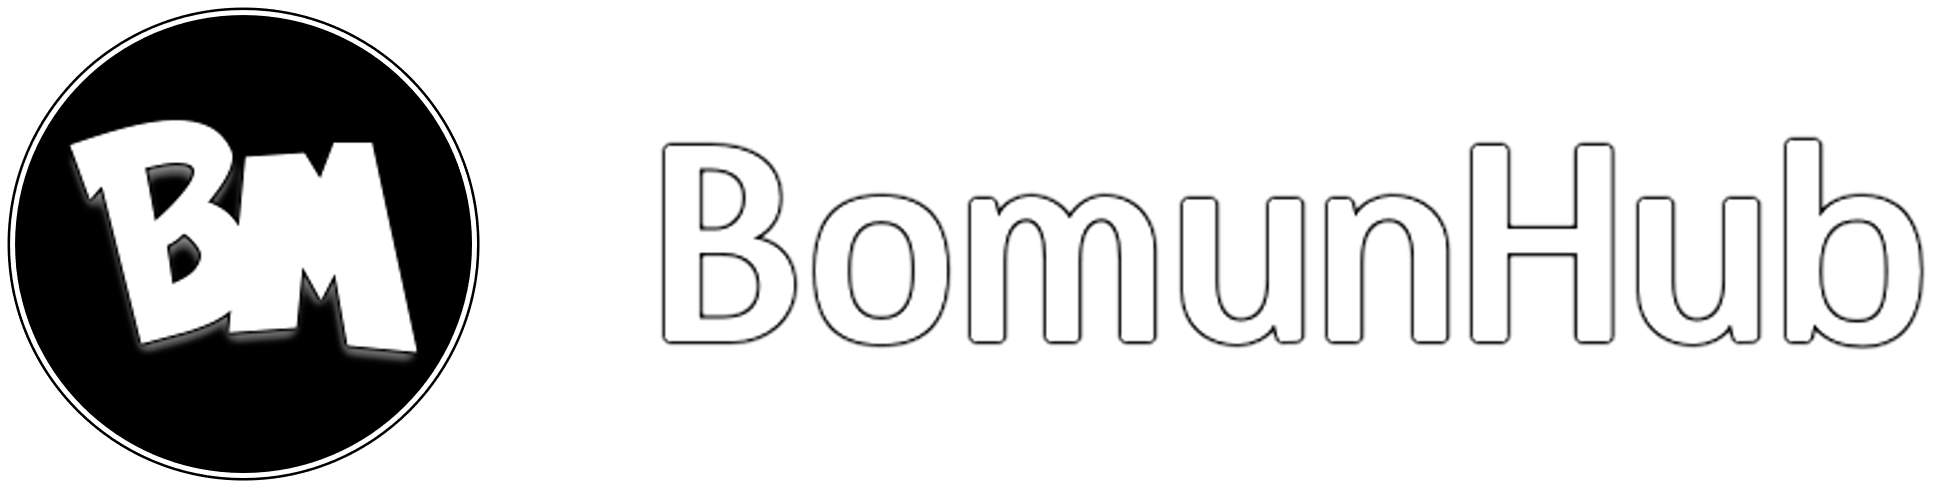 bomunhub-logo